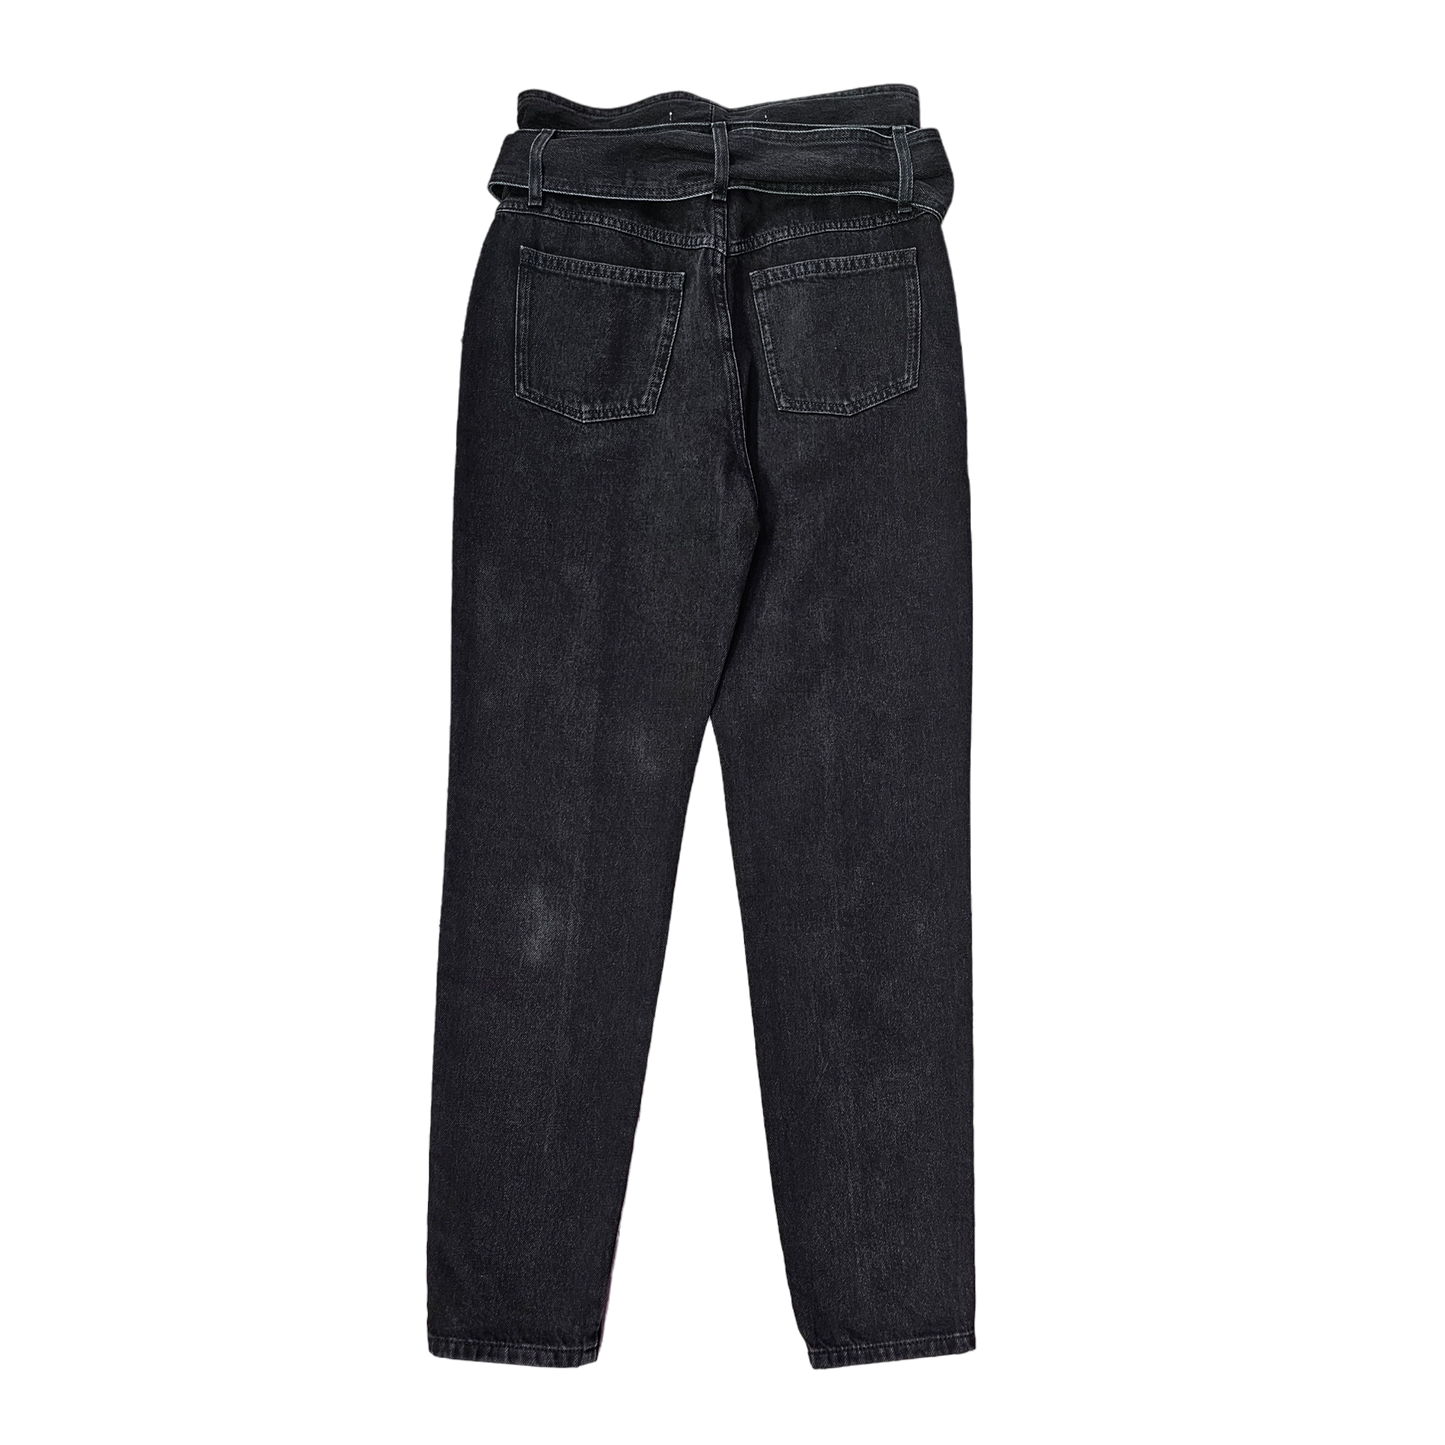 Jeans Designer By IRO Size: M